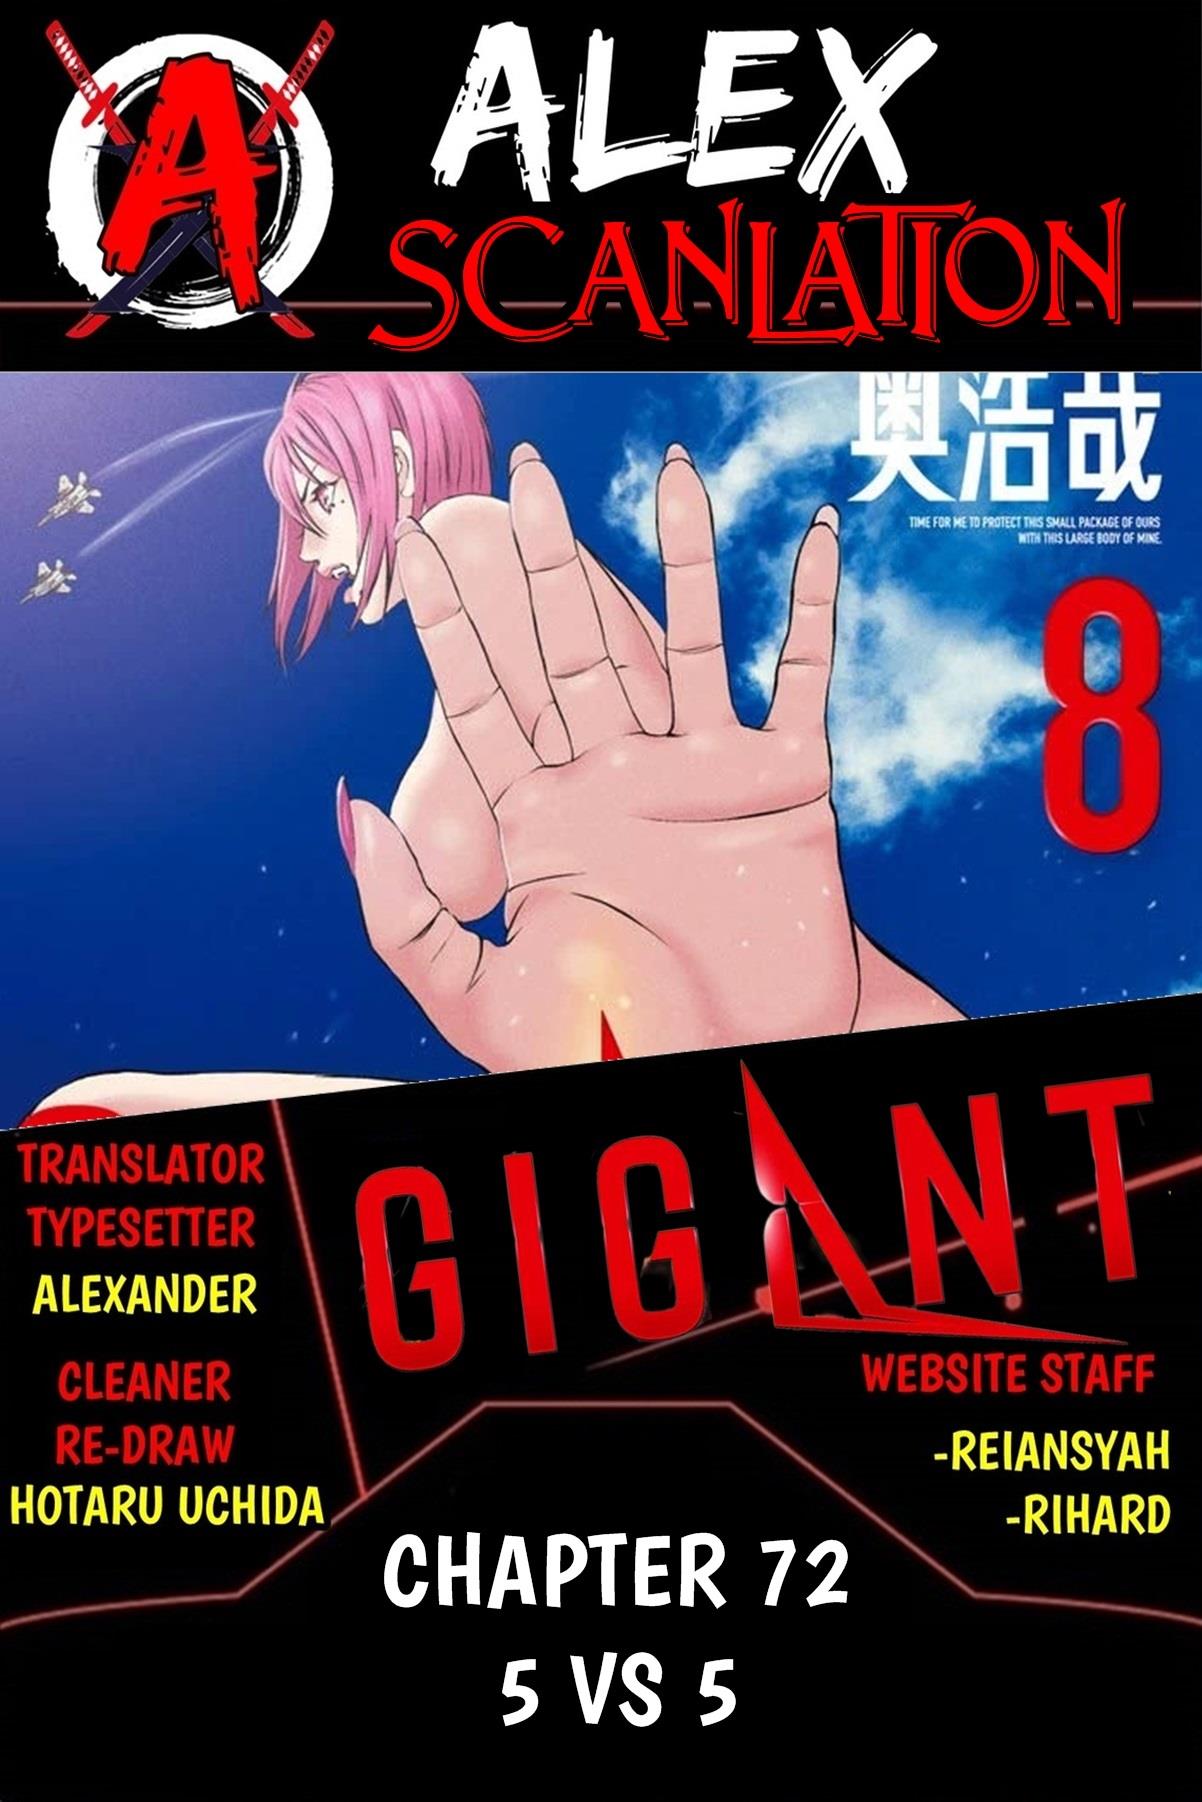 GIGANT Chapter 72